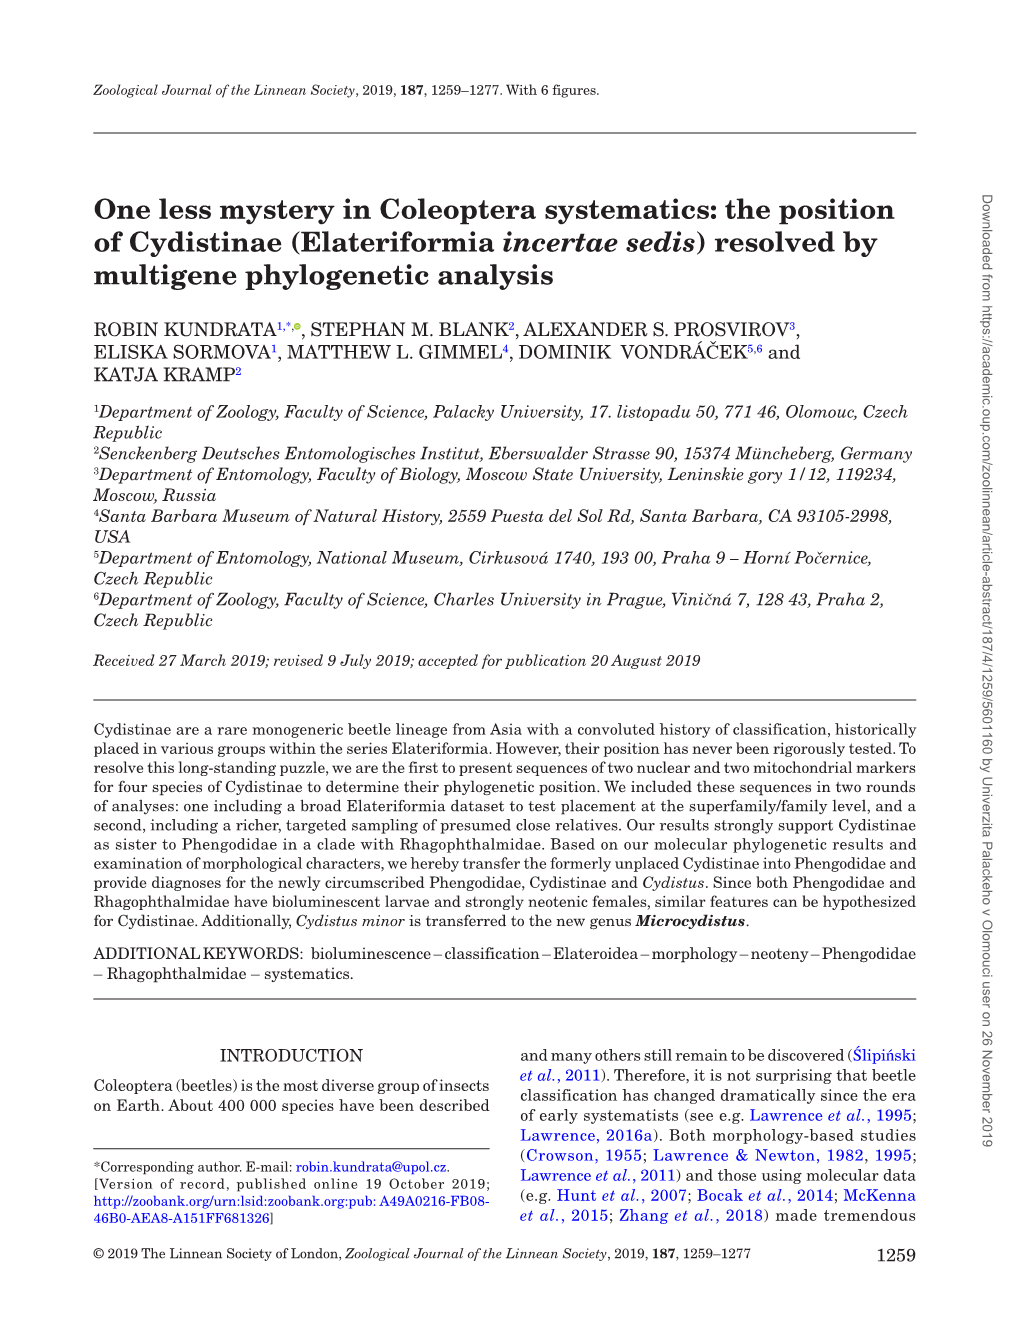 The Position of Cydistinae (Elateriformia Incertae Sedis) Resolved by Multigene Phylogenetic Analysis